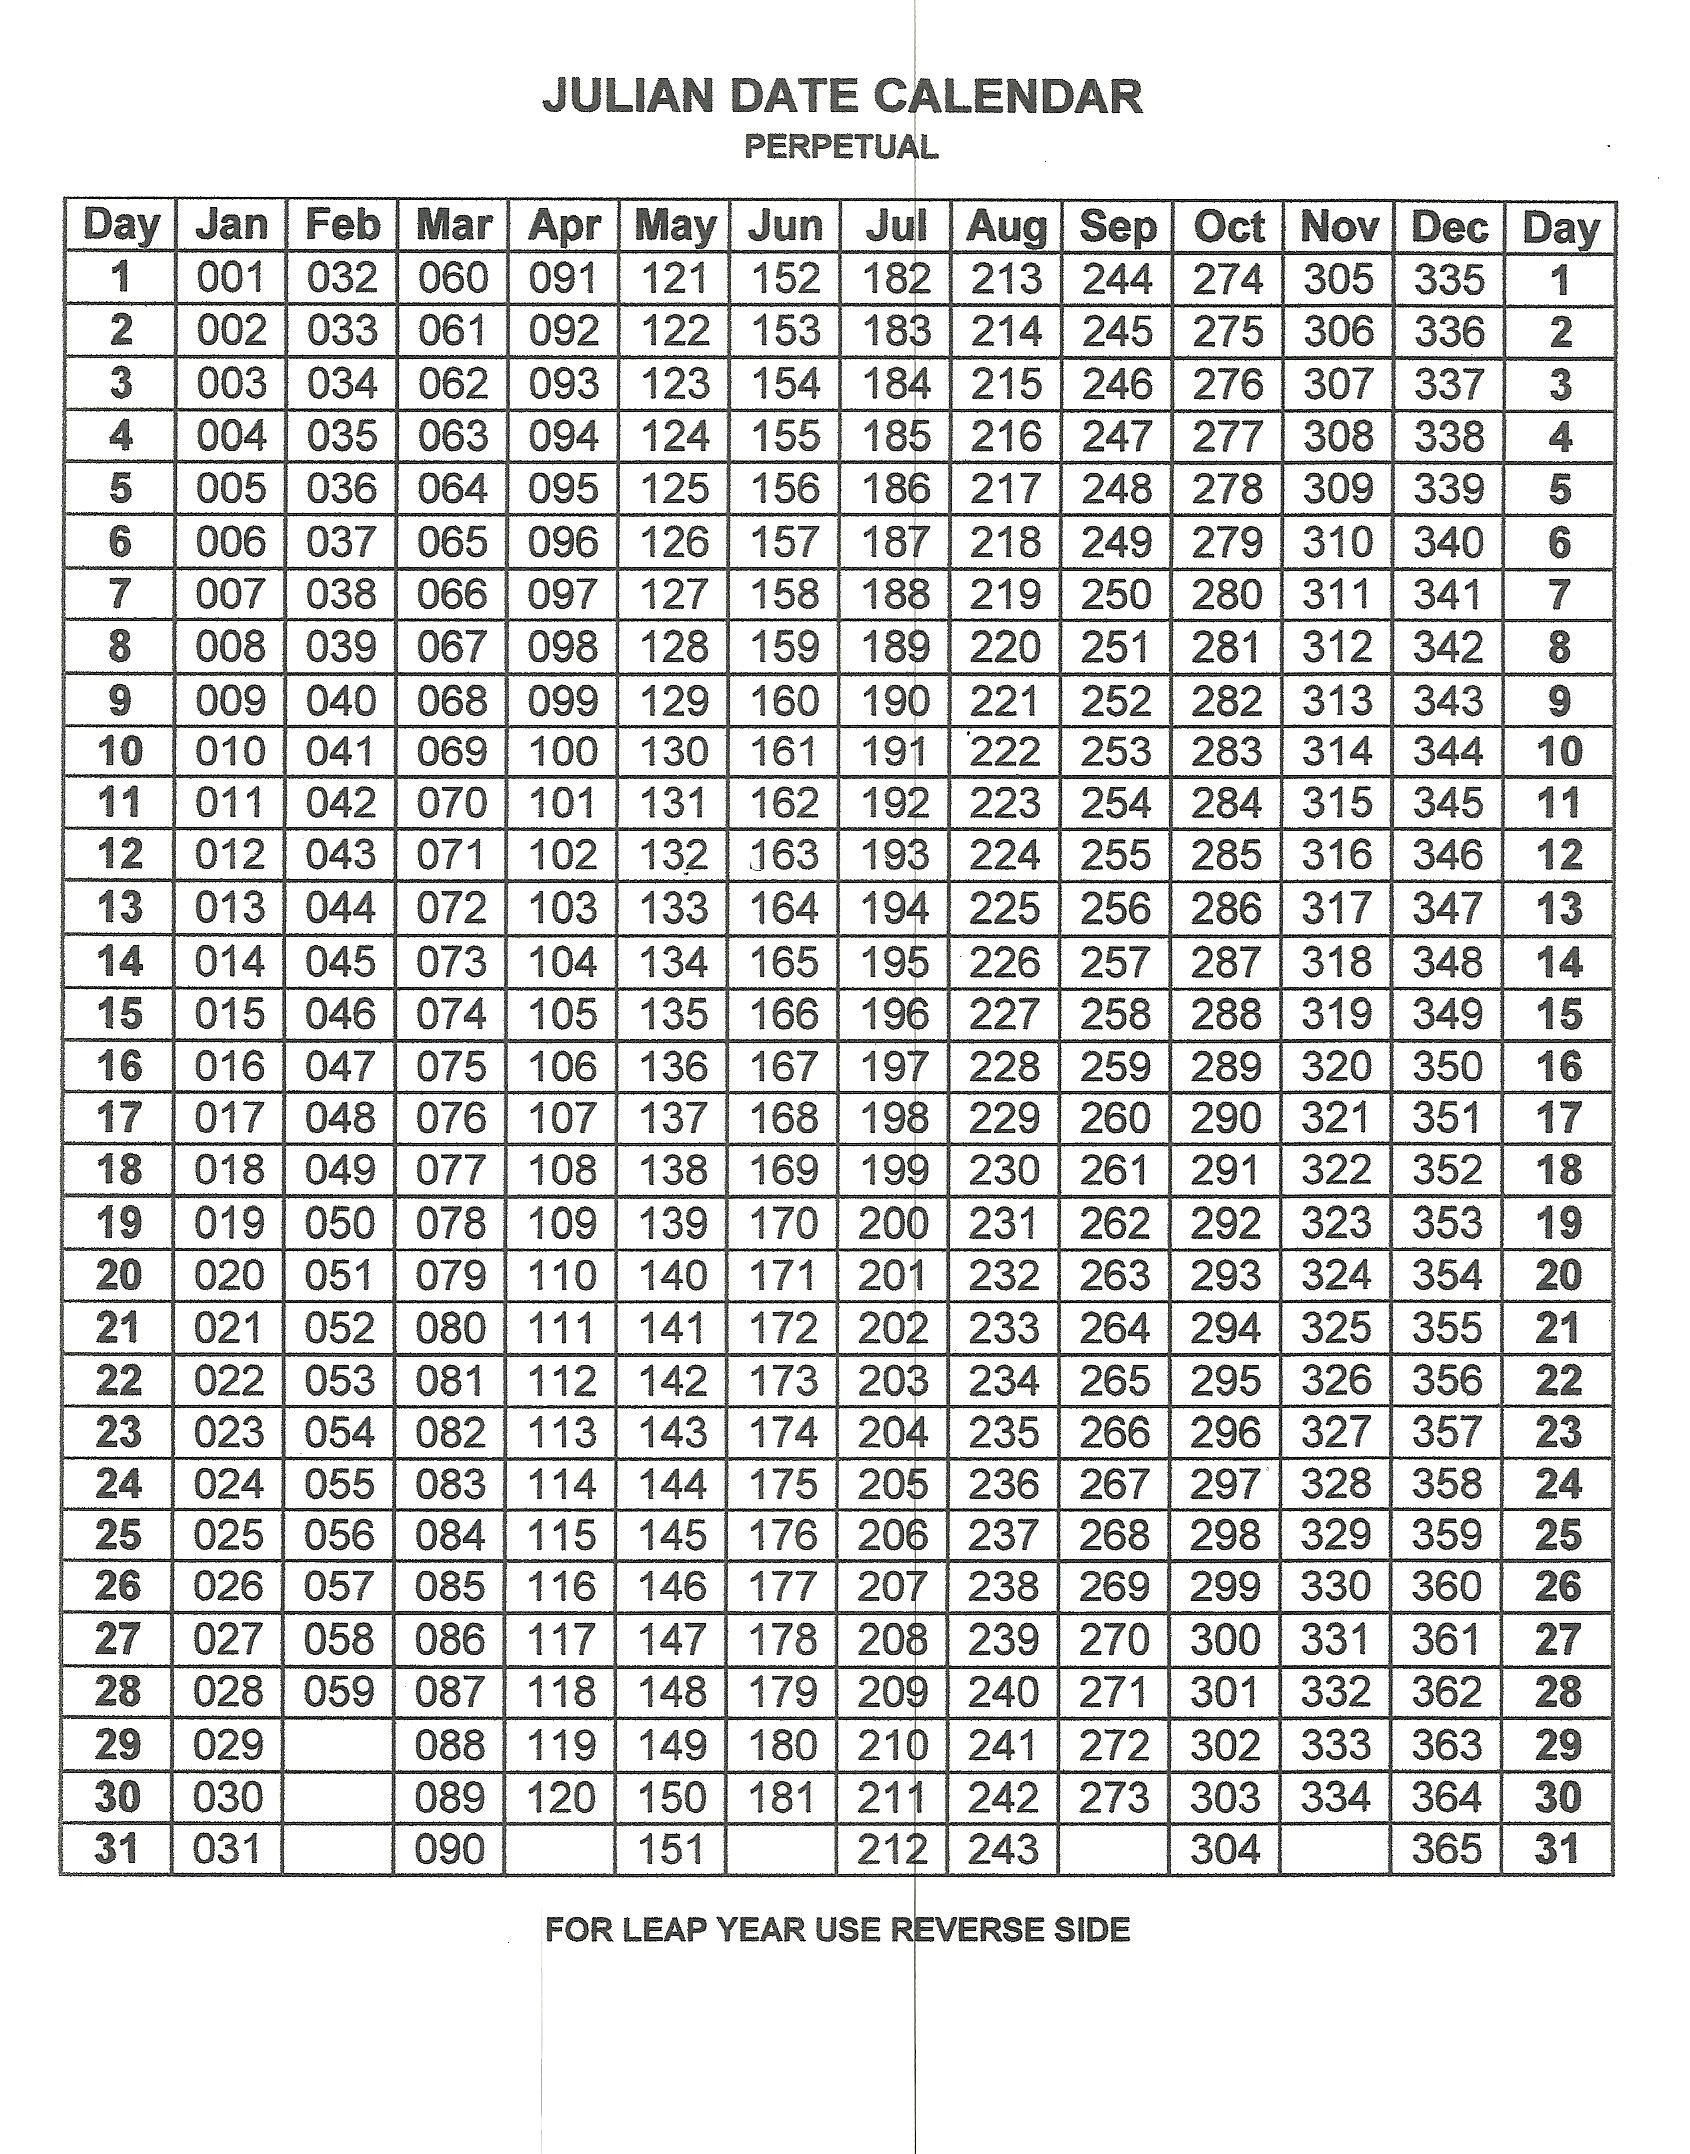 Perpetual Julian Date Calendar | Calendar Printables  Julian Day Calendar 2020